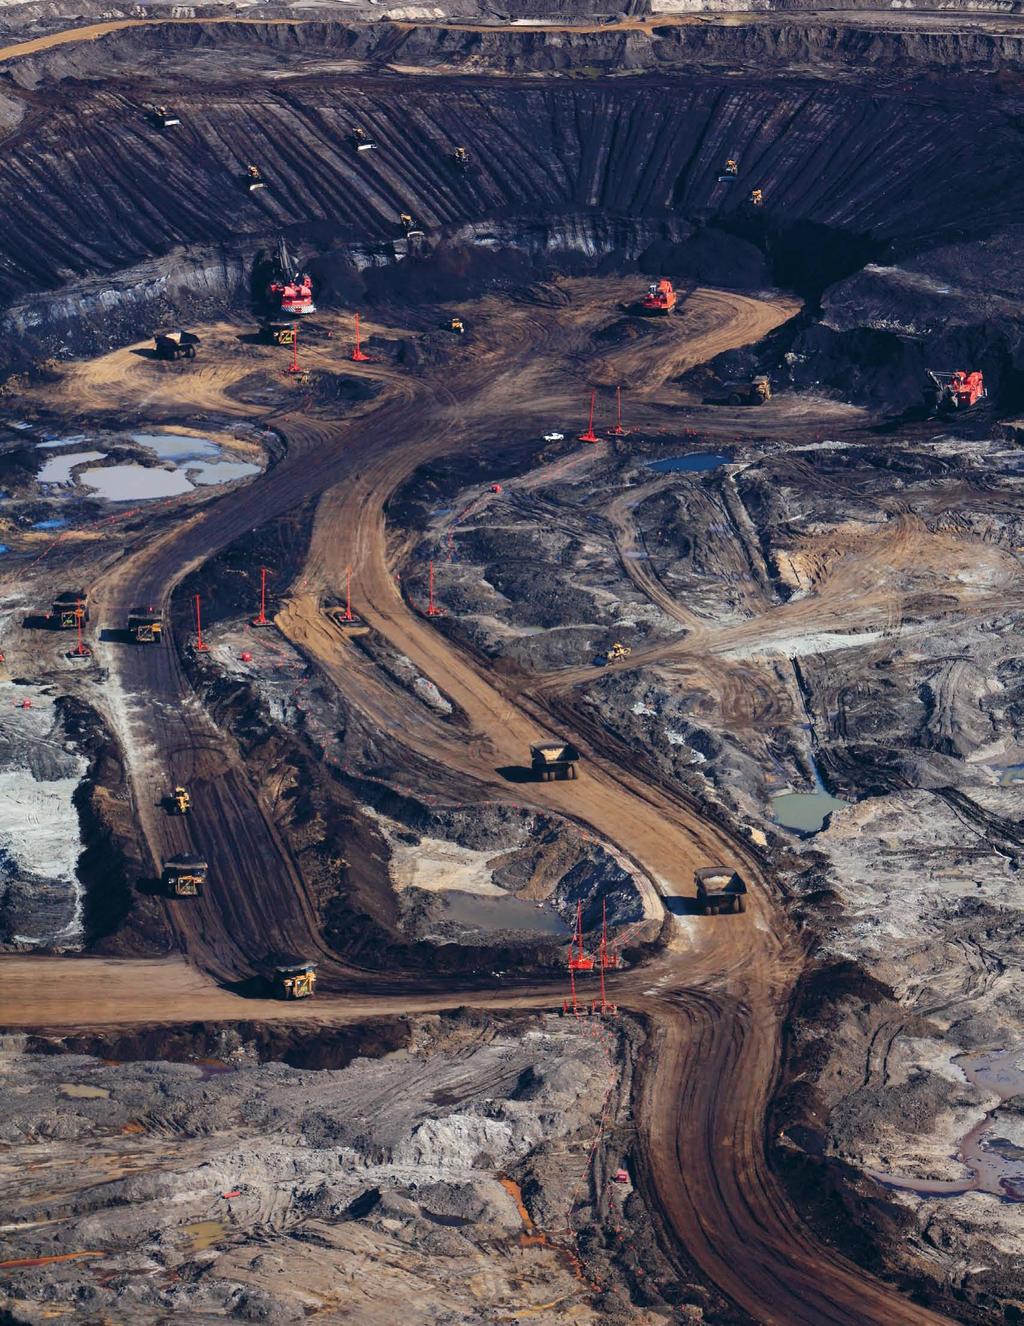 35 Mining bitumen at the Syncrude Aurora tar